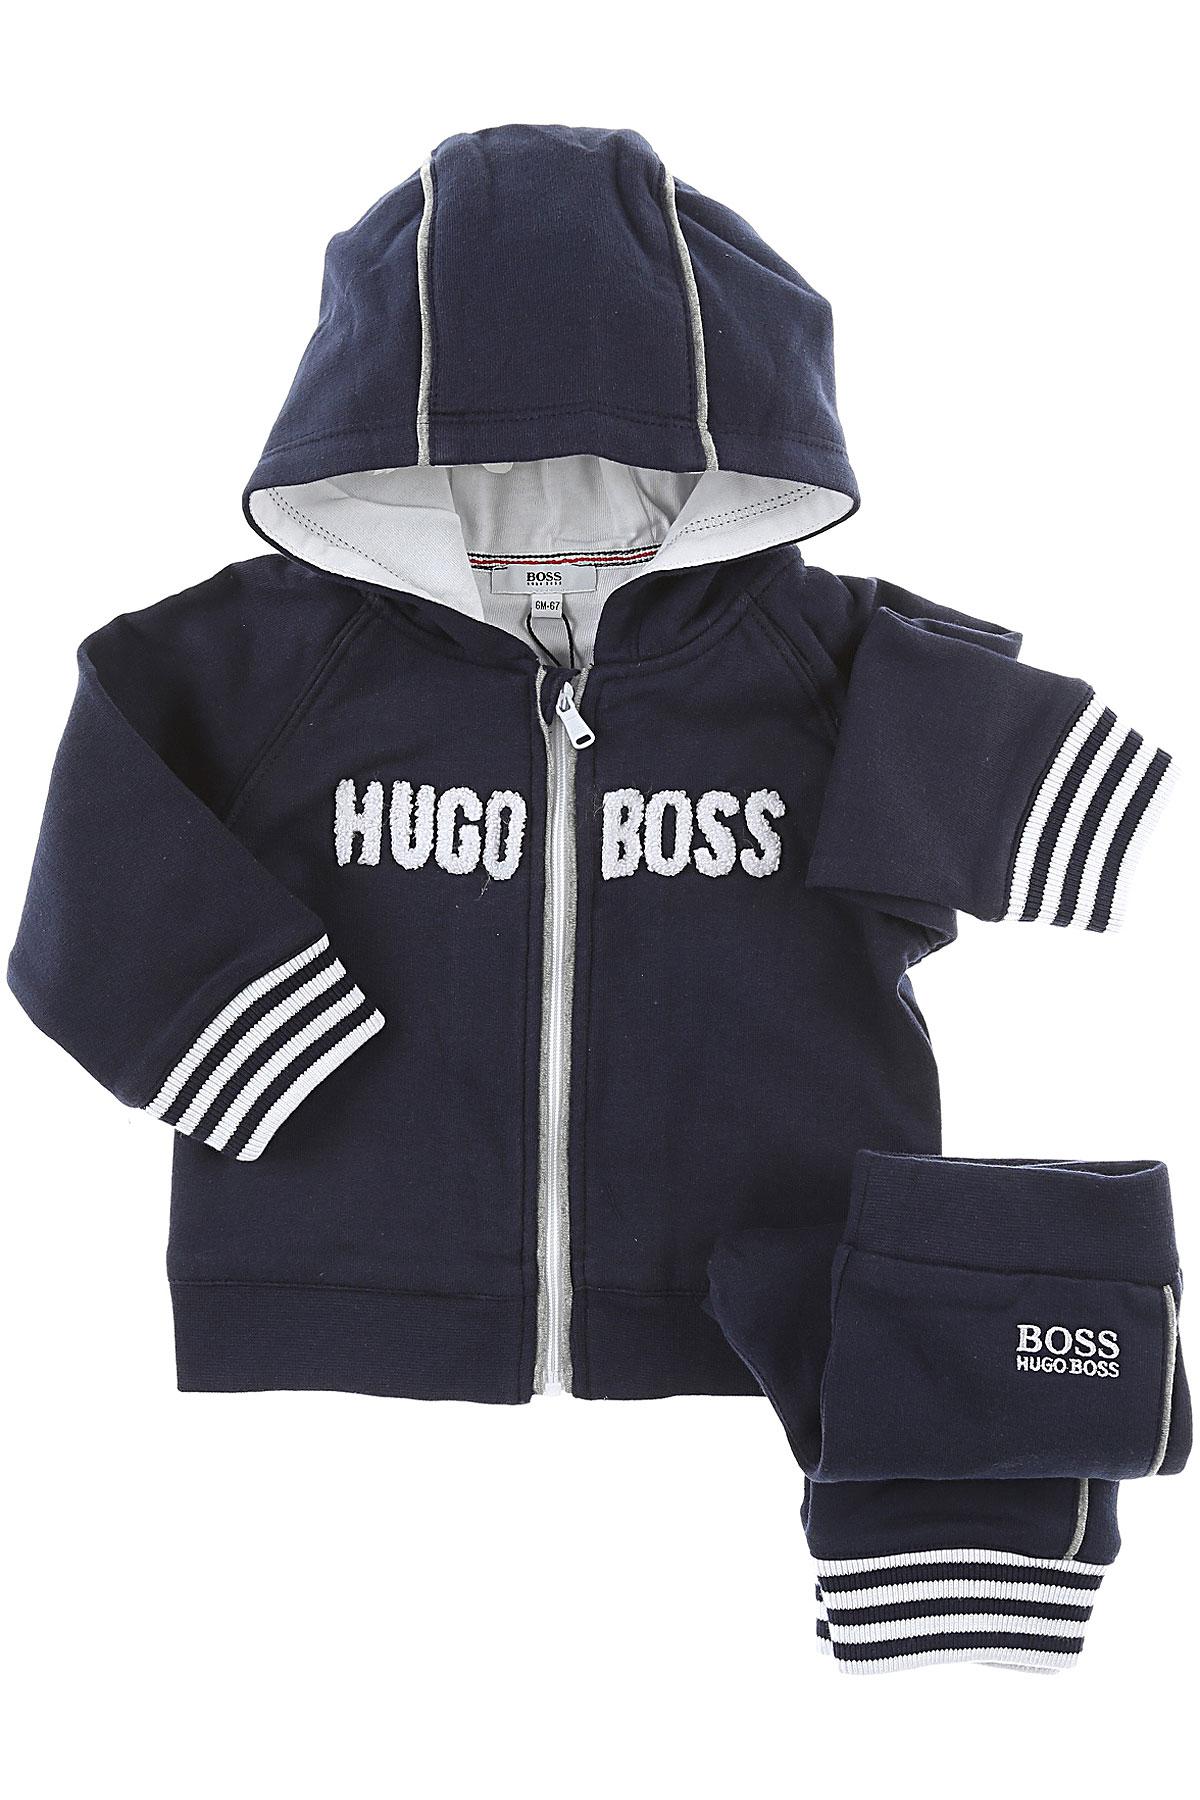 hugo boss baby coat sale